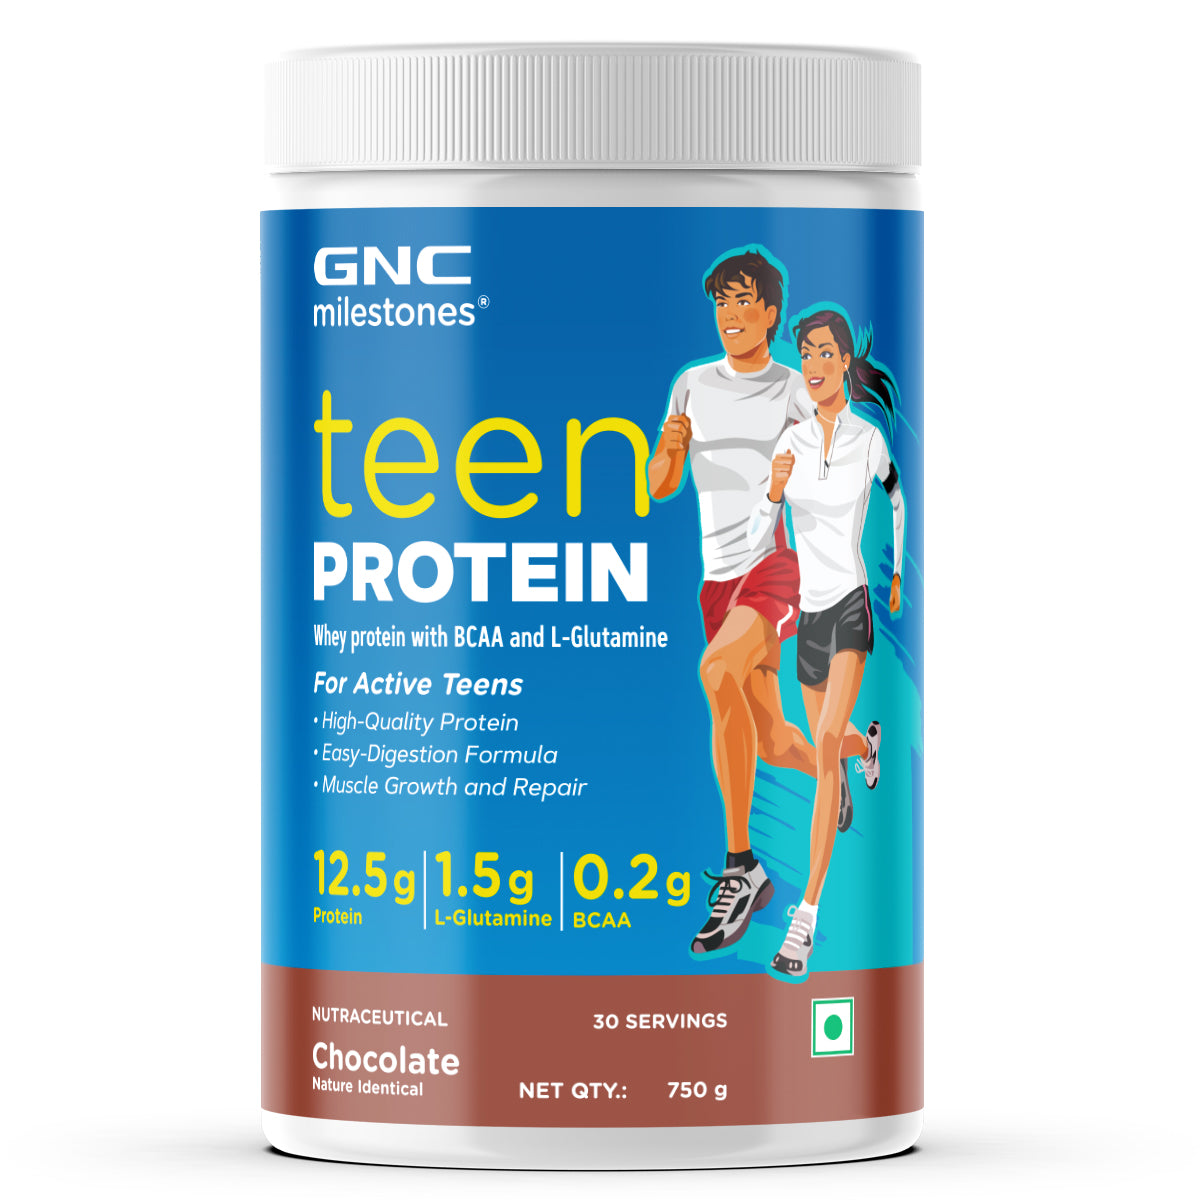 GNC milestones Teen Protein